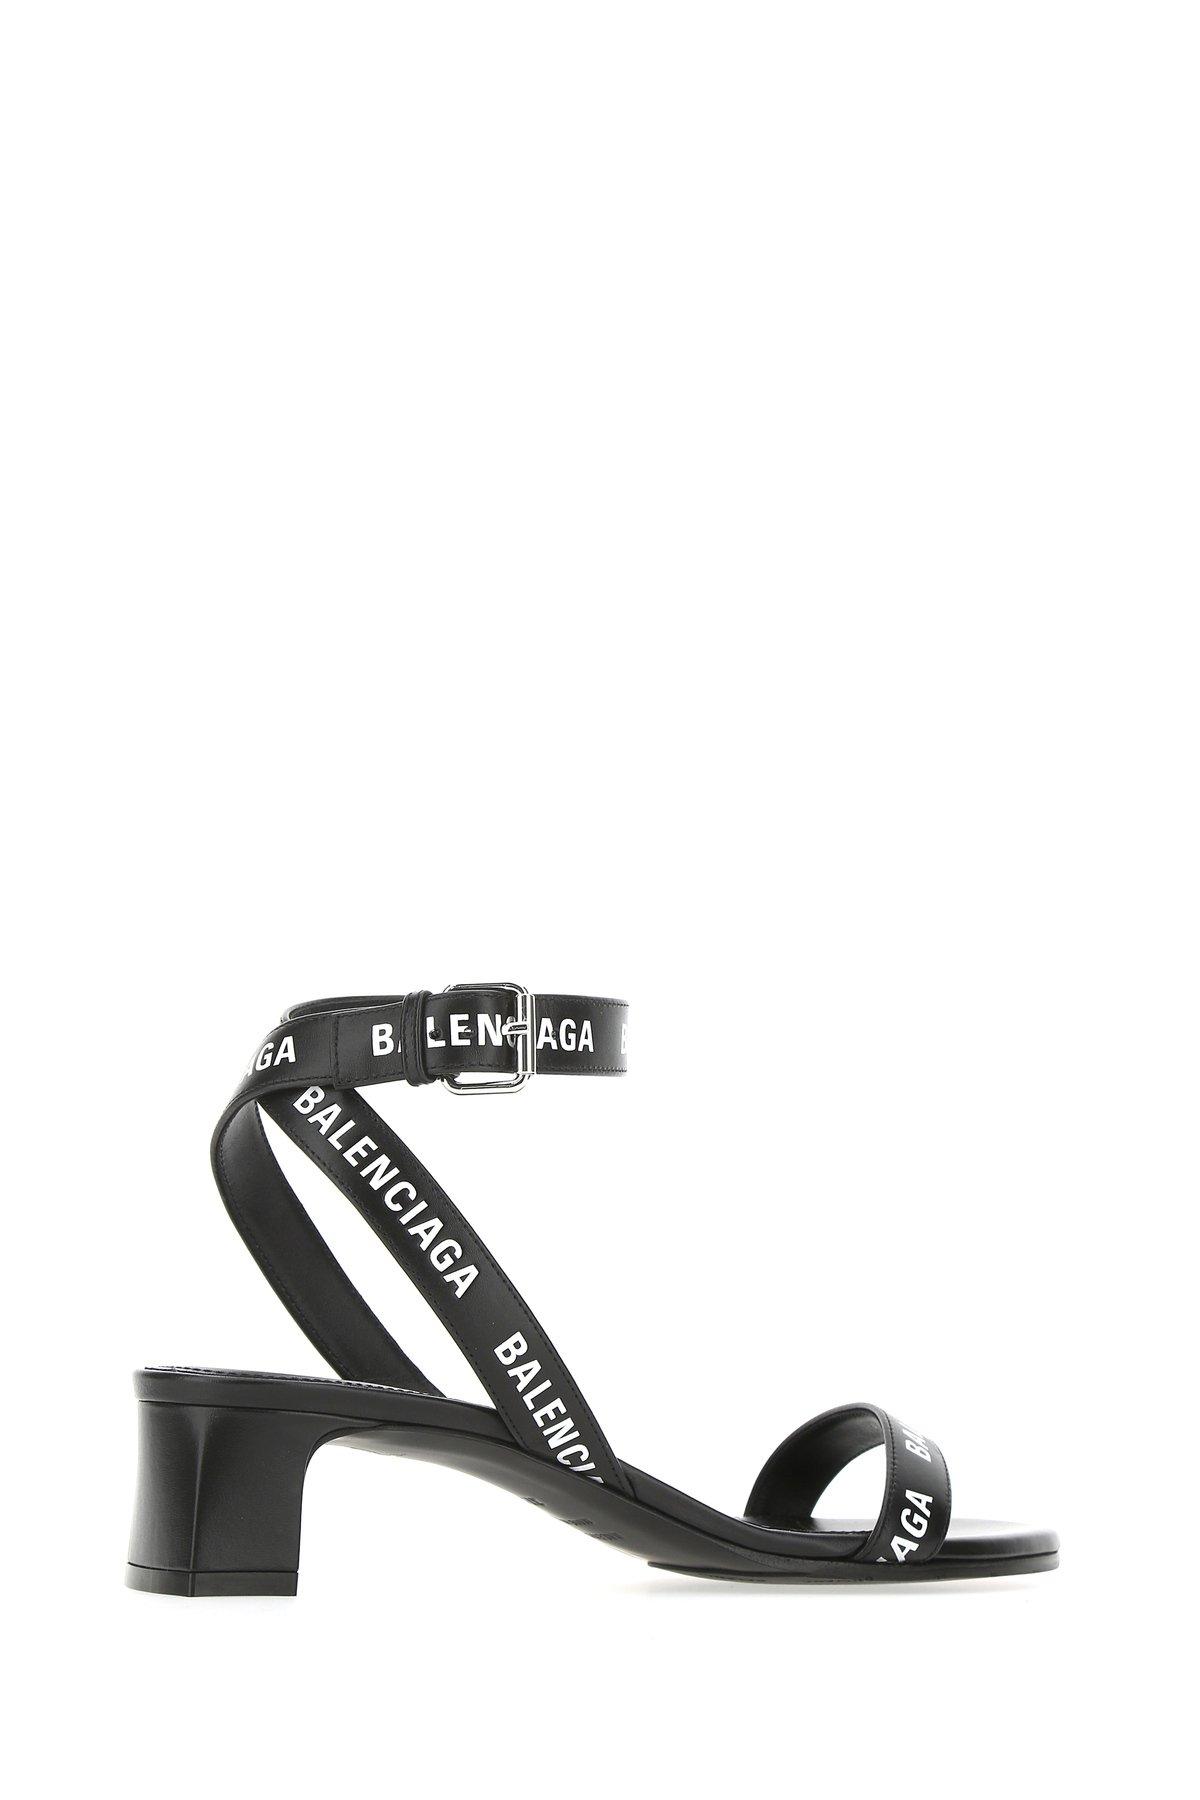 Balenciaga Leather Black & White Allover Logo Strap Sandals | Lyst